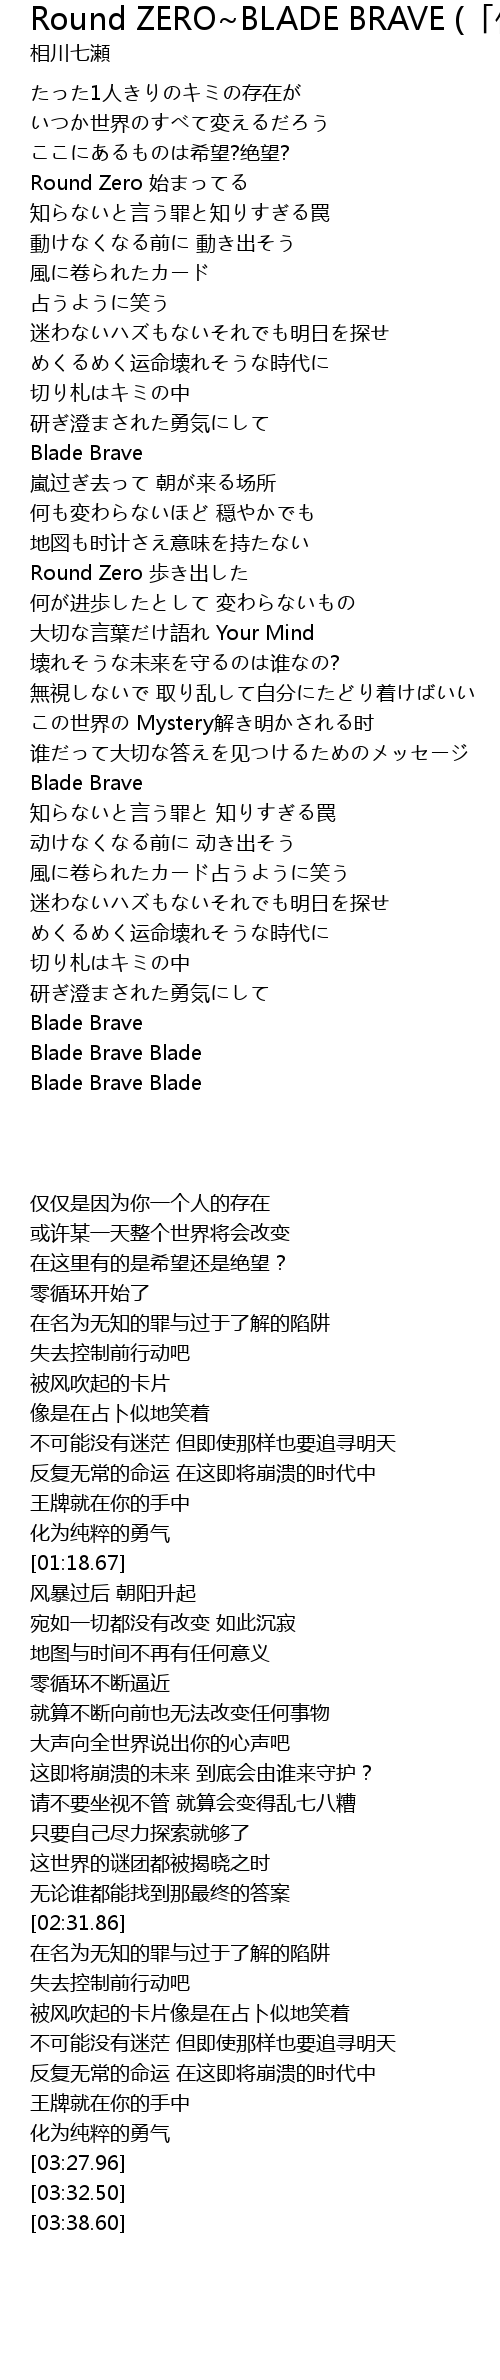 Round Zero Blade Brave 仮面ライダー剣 ブレイド Round Zero Blade Brave Jia Mian Jian Lyrics Follow Lyrics